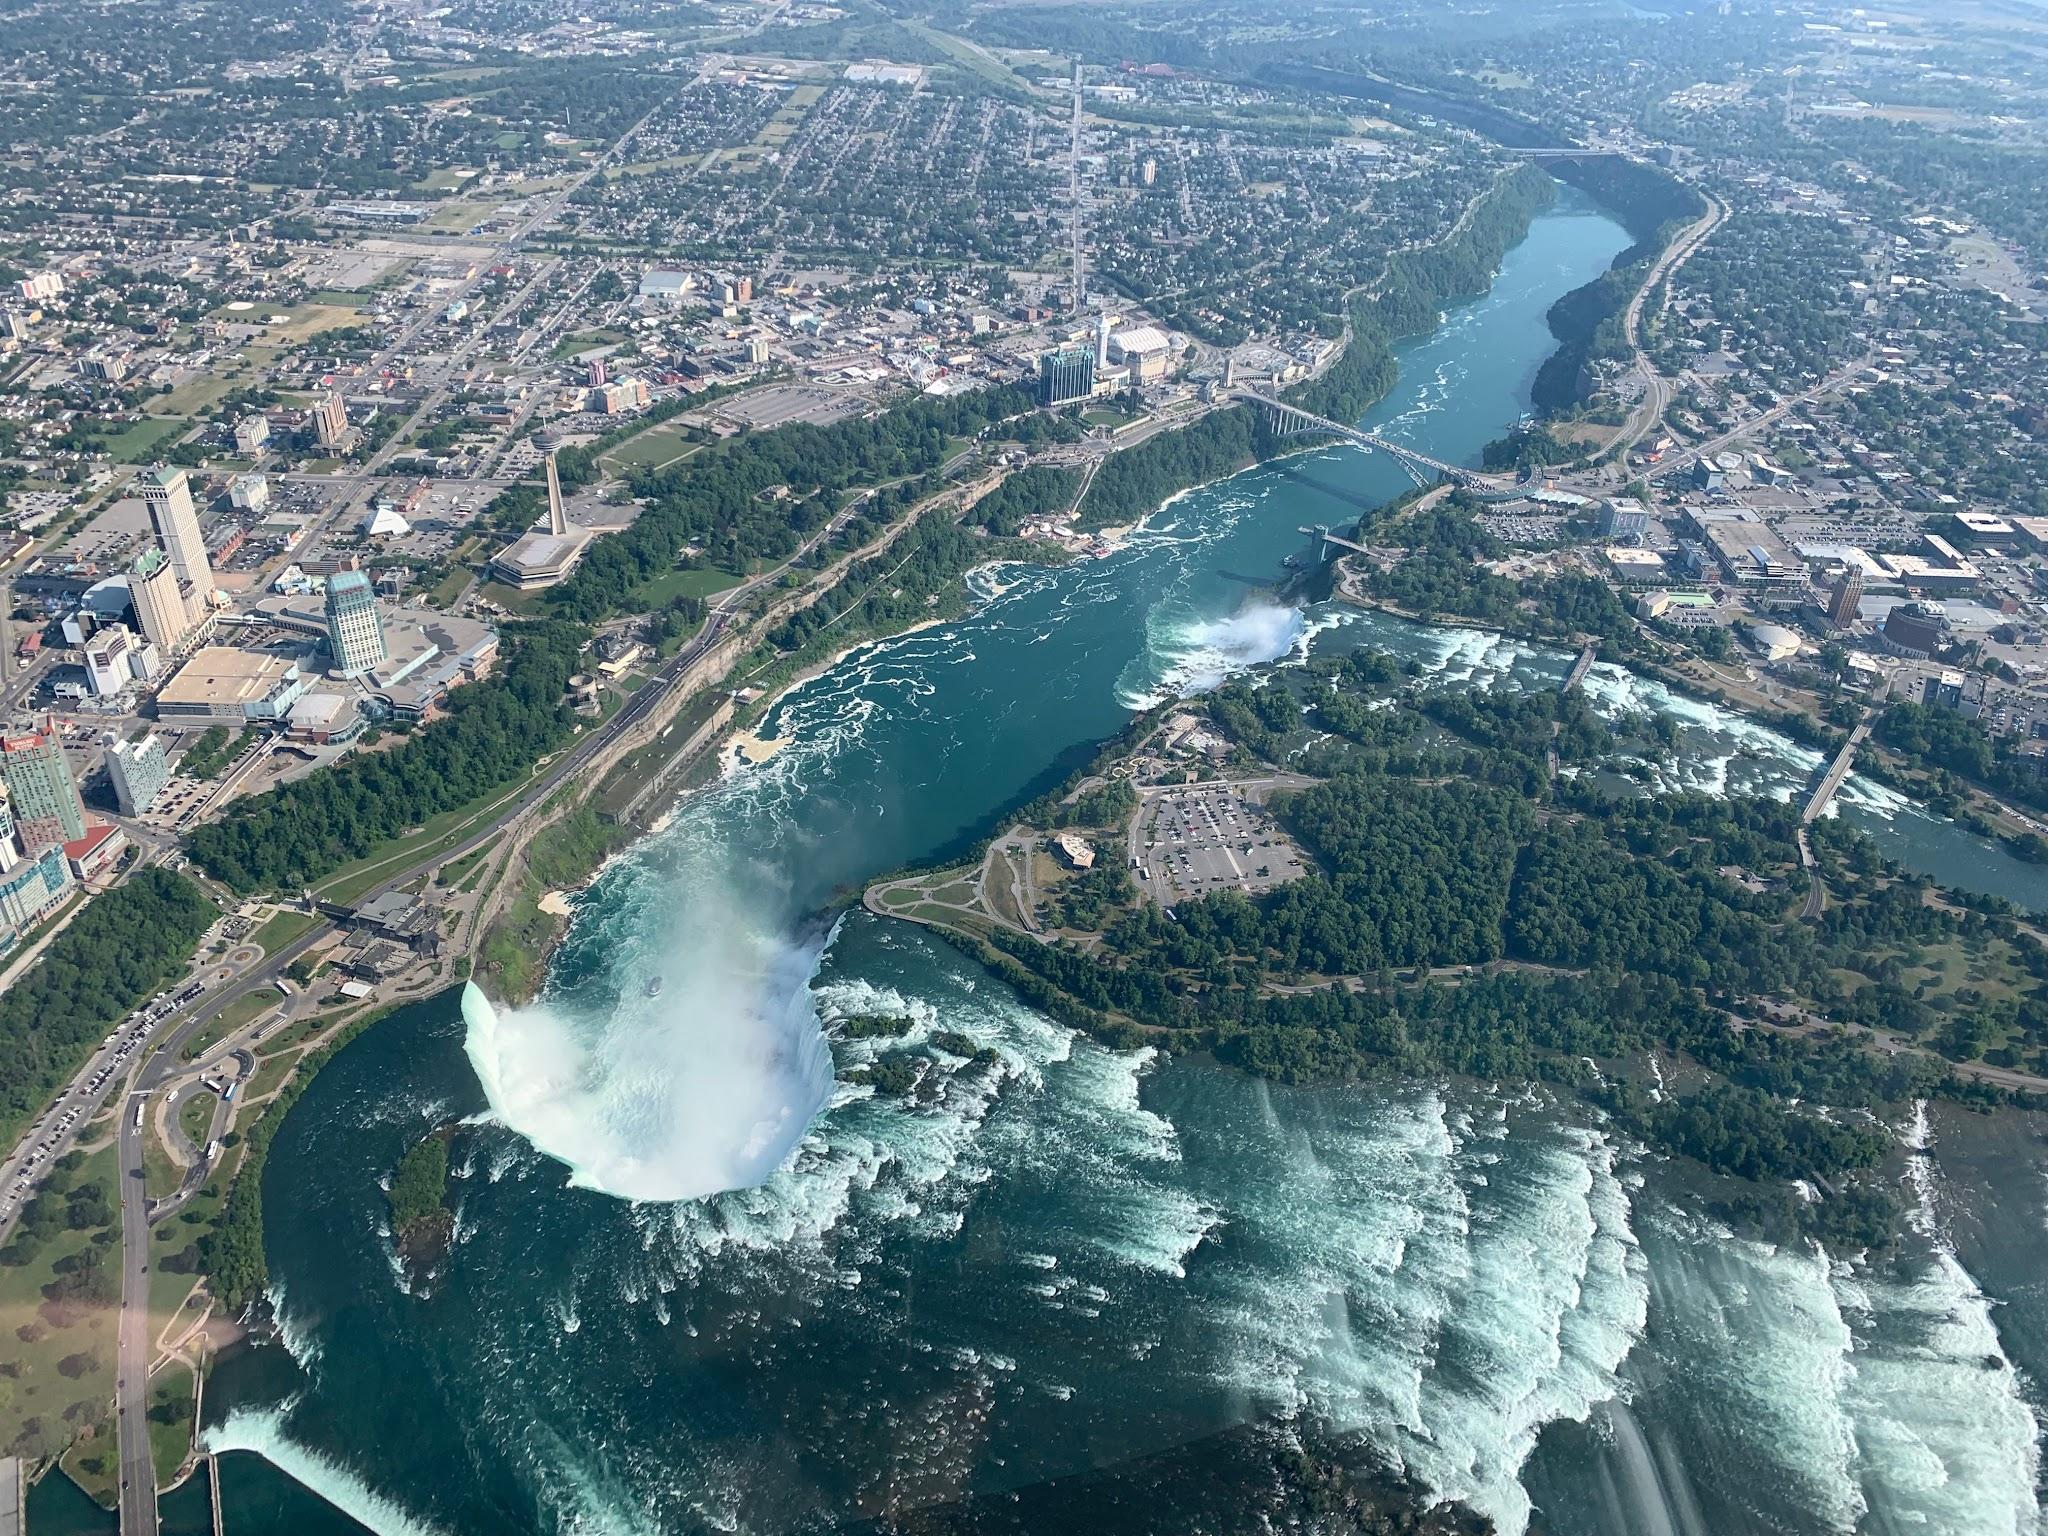 Niagara Falls photo